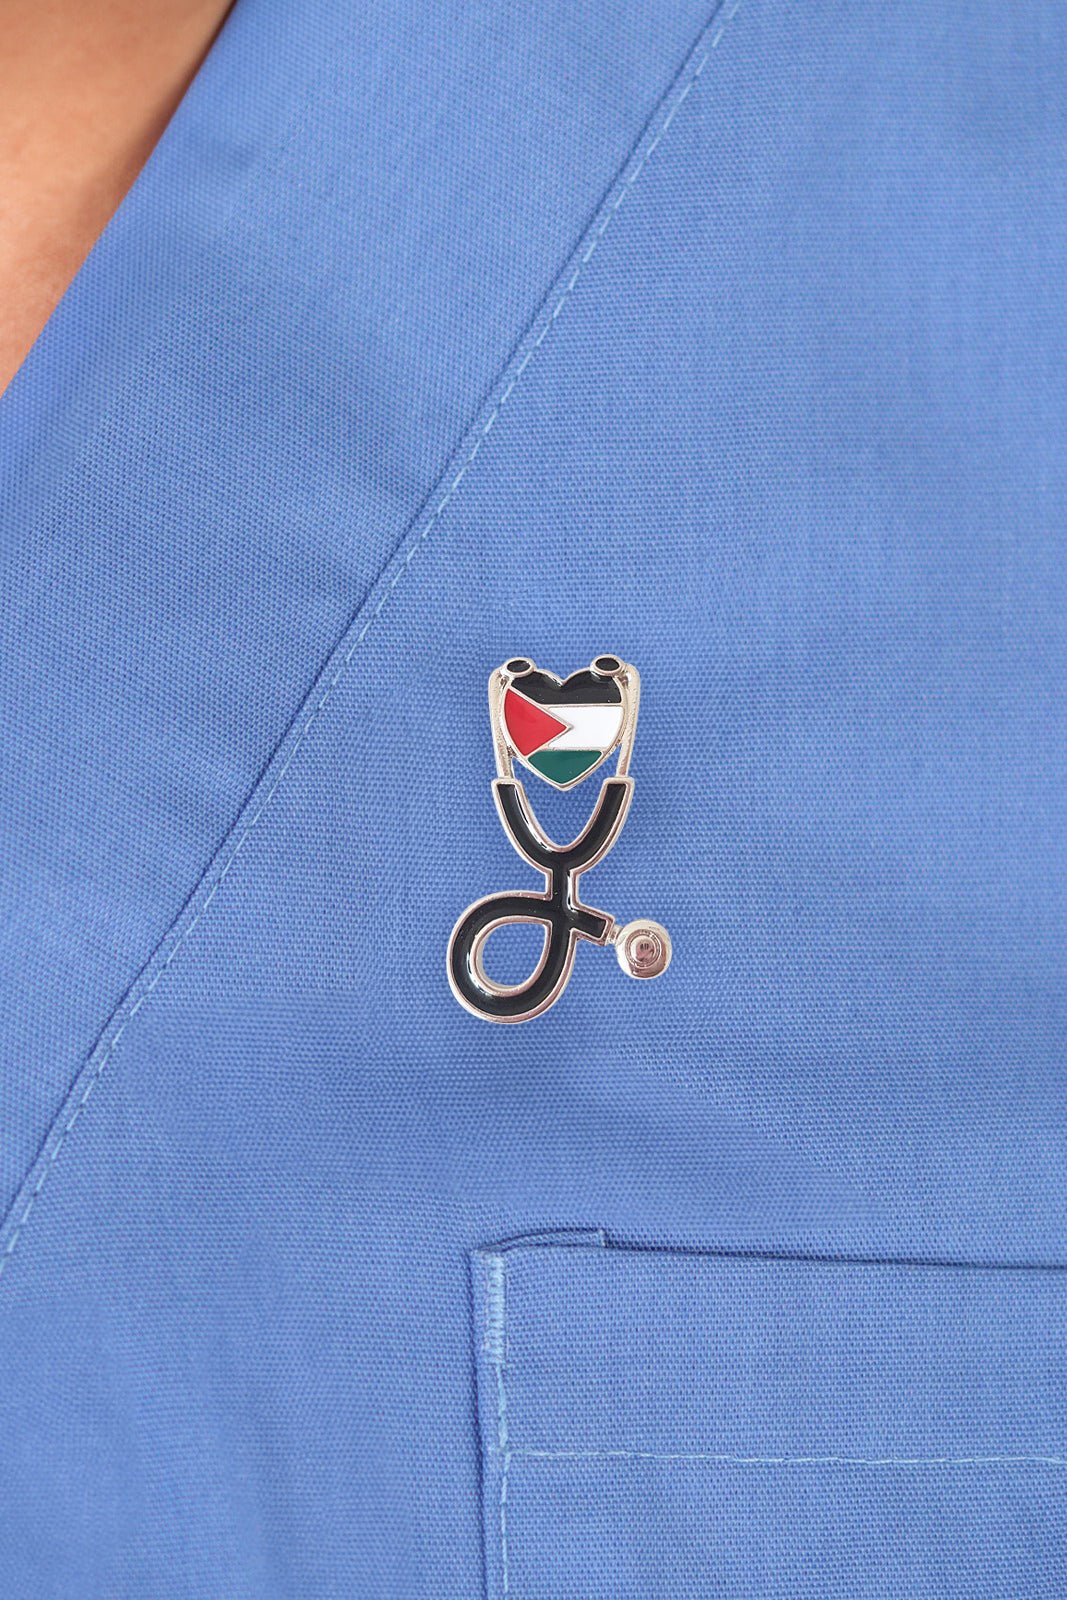 Palestine Flag Pin